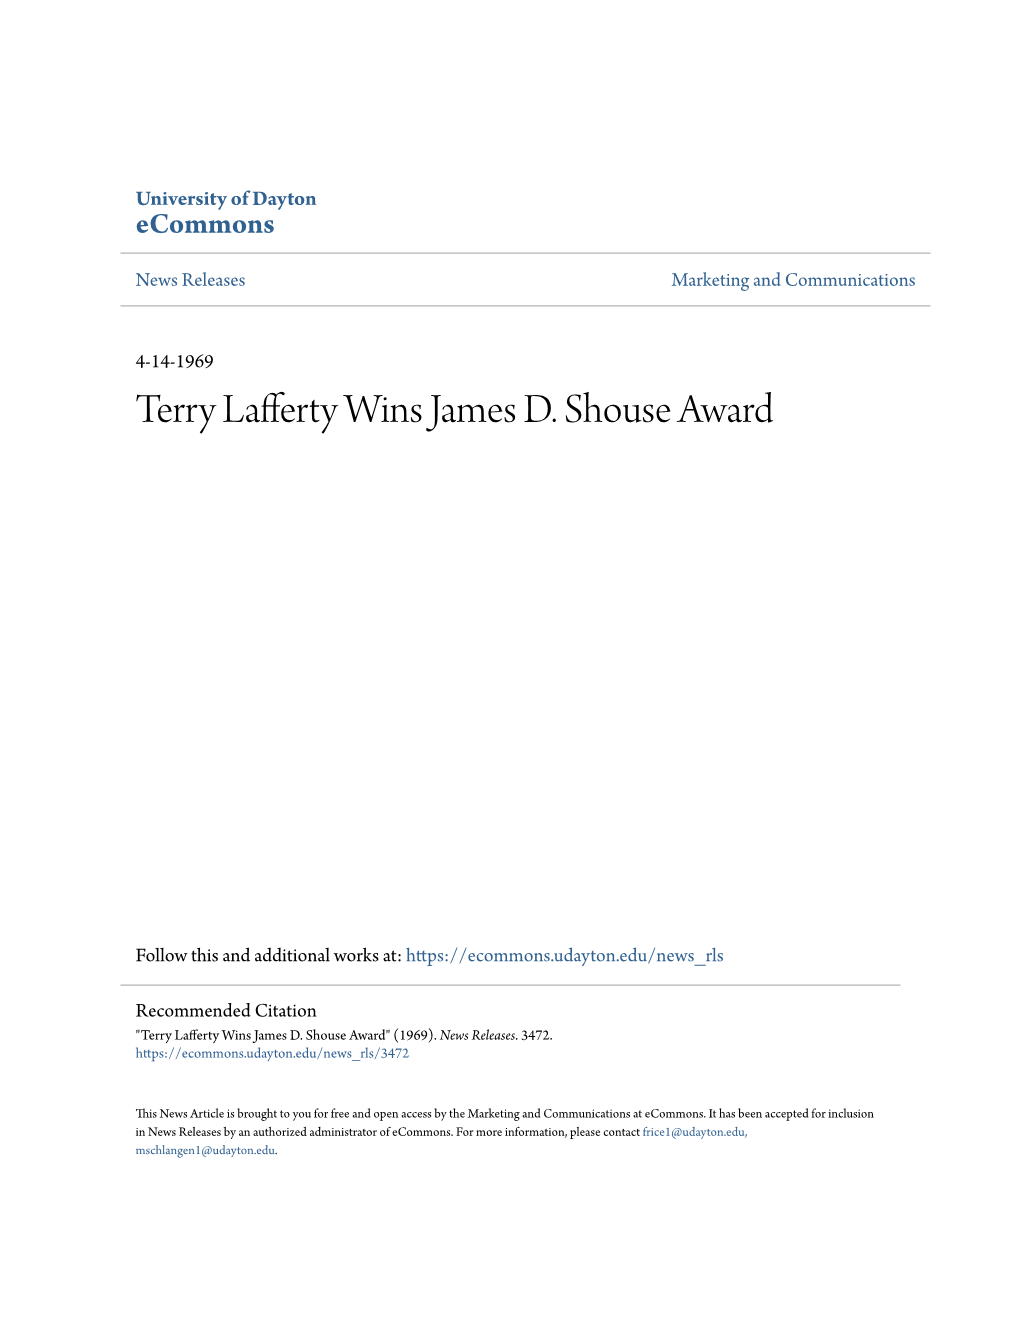 Terry Lafferty Wins James D. Shouse Award